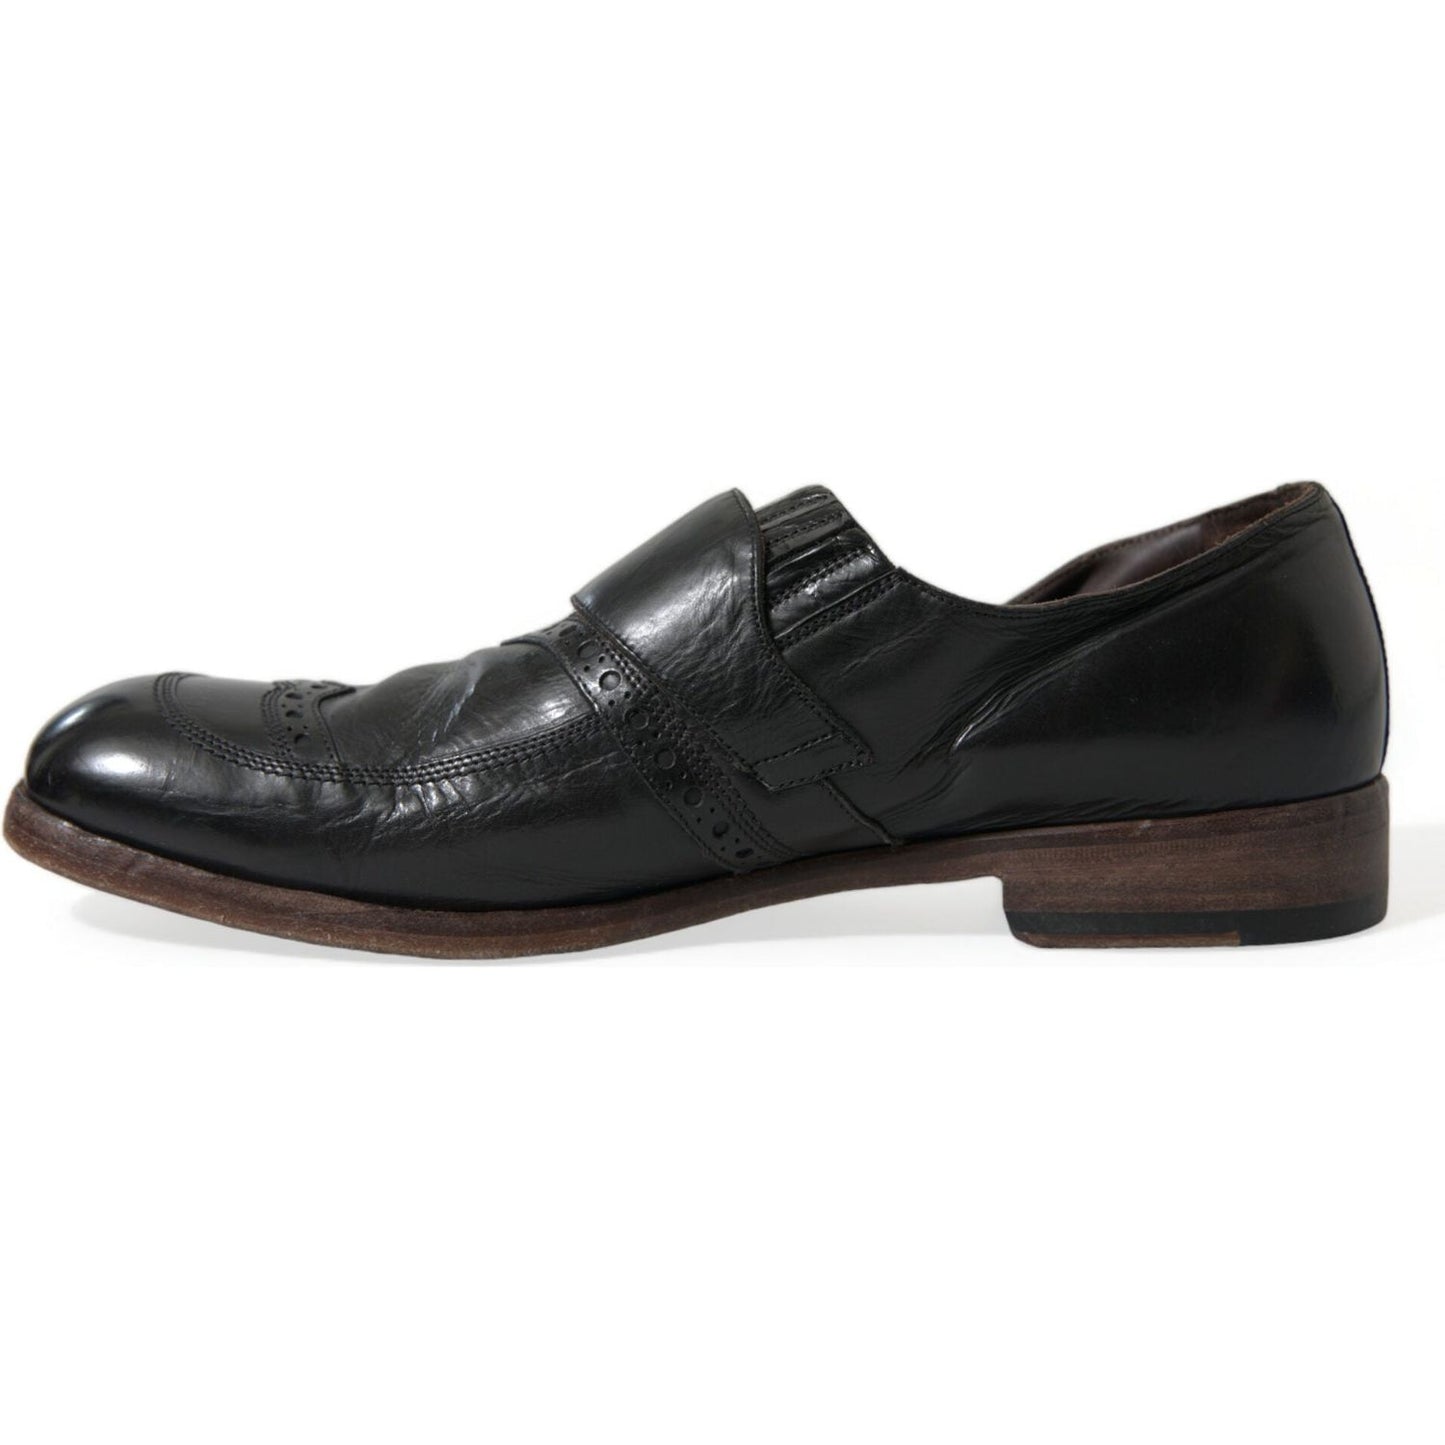 Dolce & Gabbana Elegant Black Leather Moccasins Dress Shoes black-leather-strap-mocassin-dress-shoes